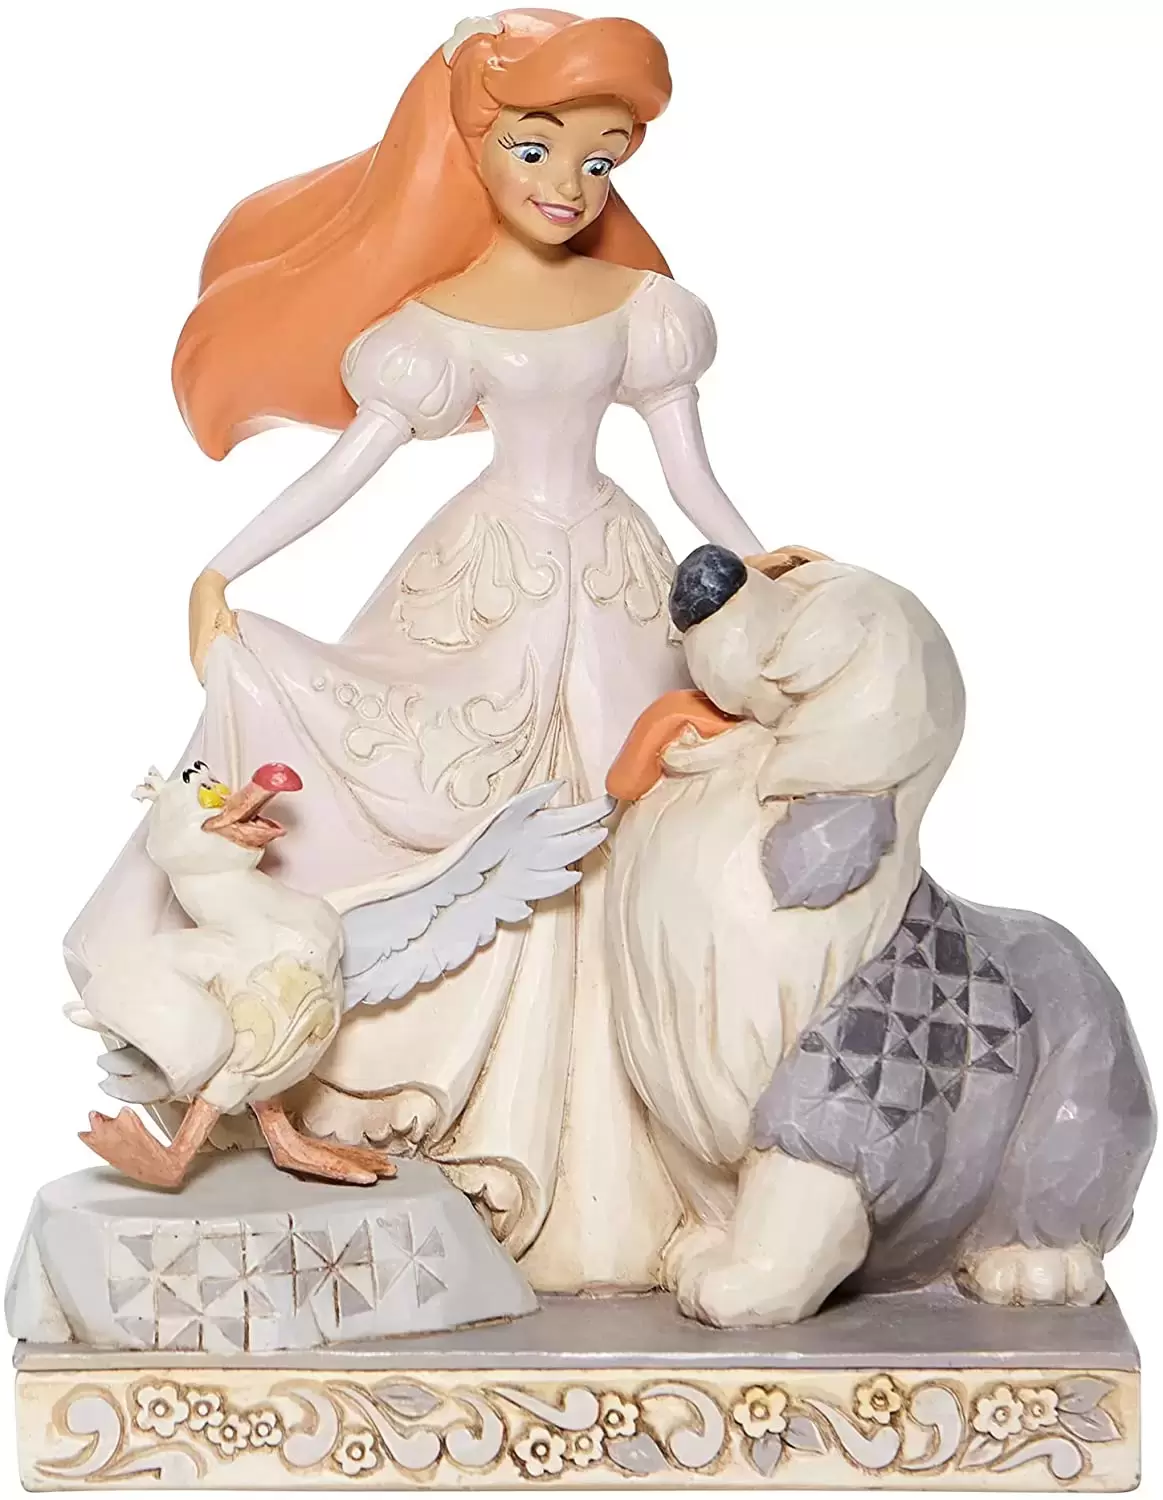 Disney Traditions by Jim Shore - White Woodland Ariel Figurine